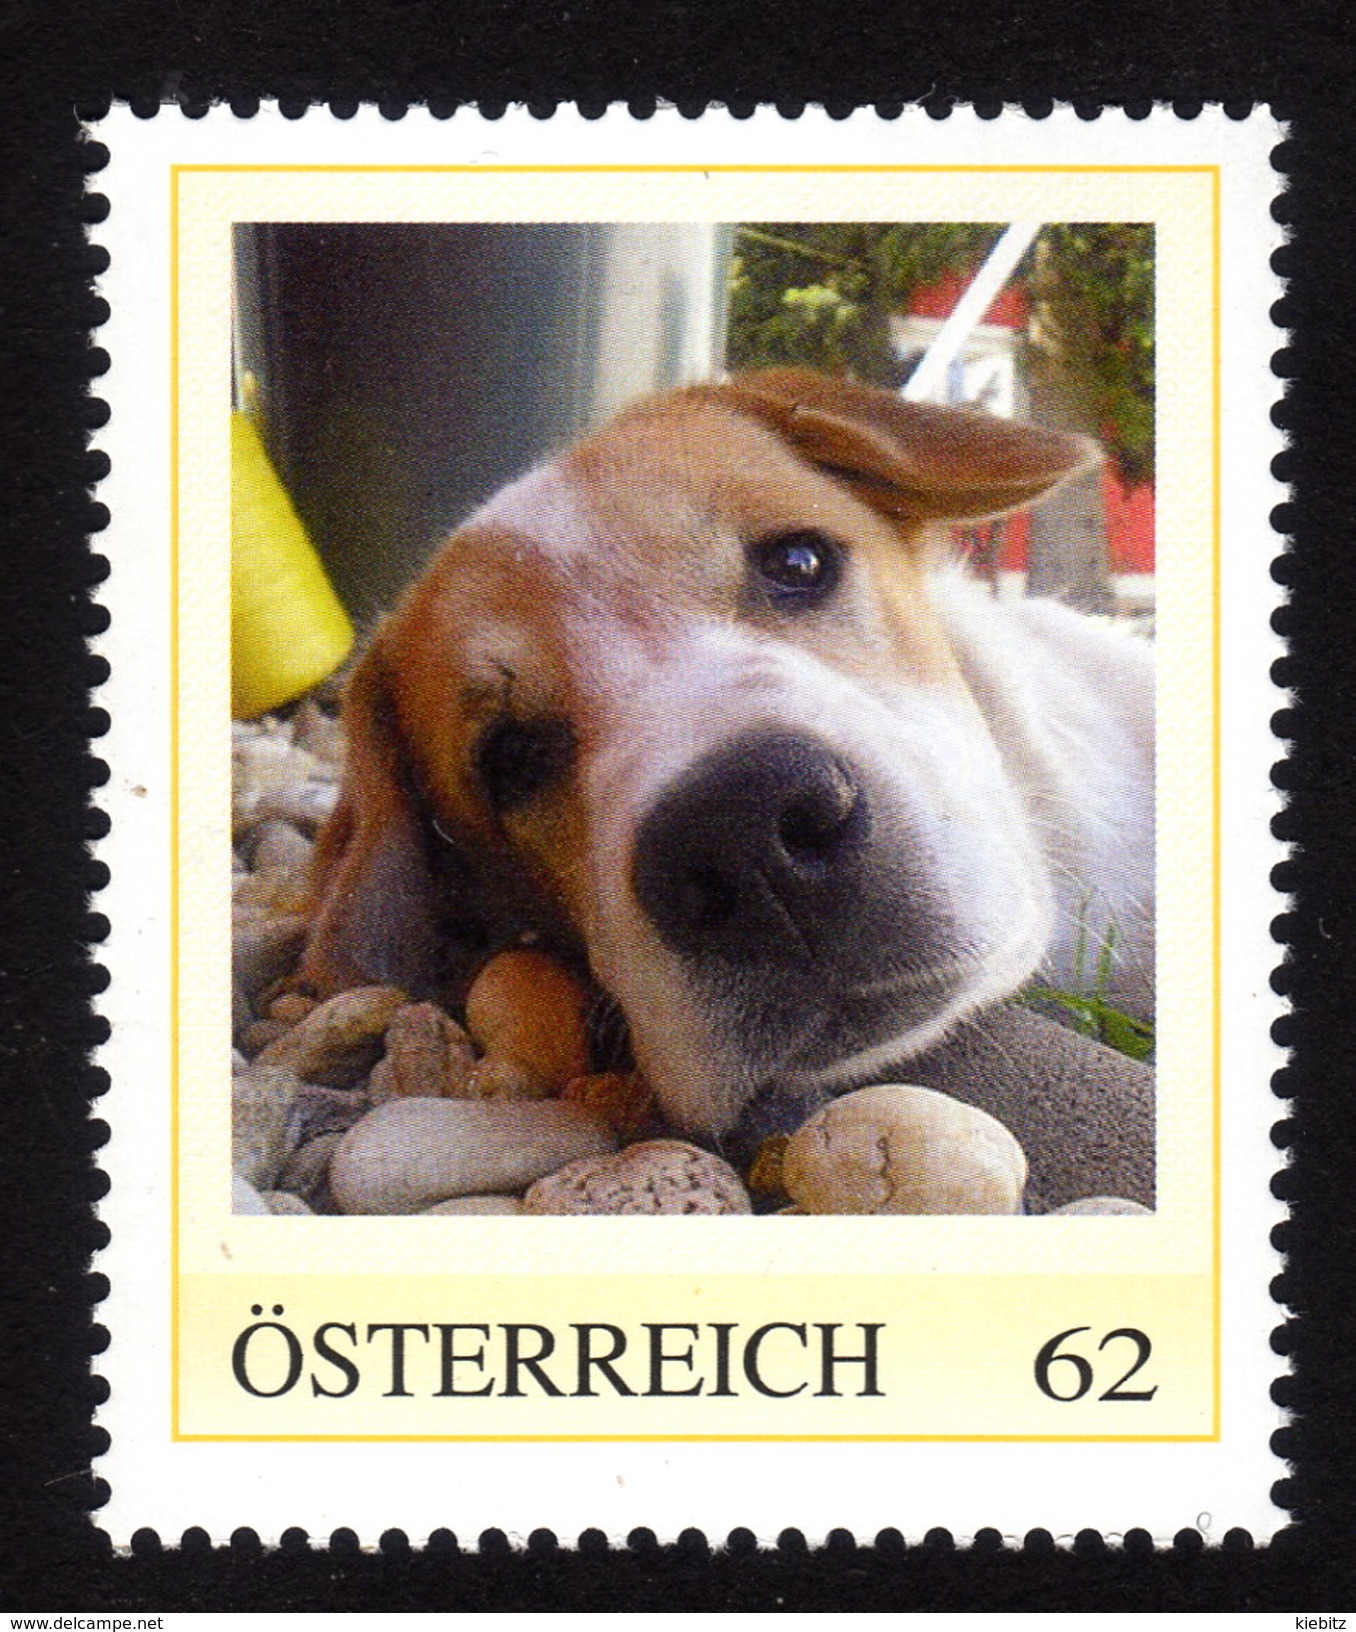 ÖSTERREICH 2012 ** Hund,dog - PM Personalized Stamp MNH - Hunde